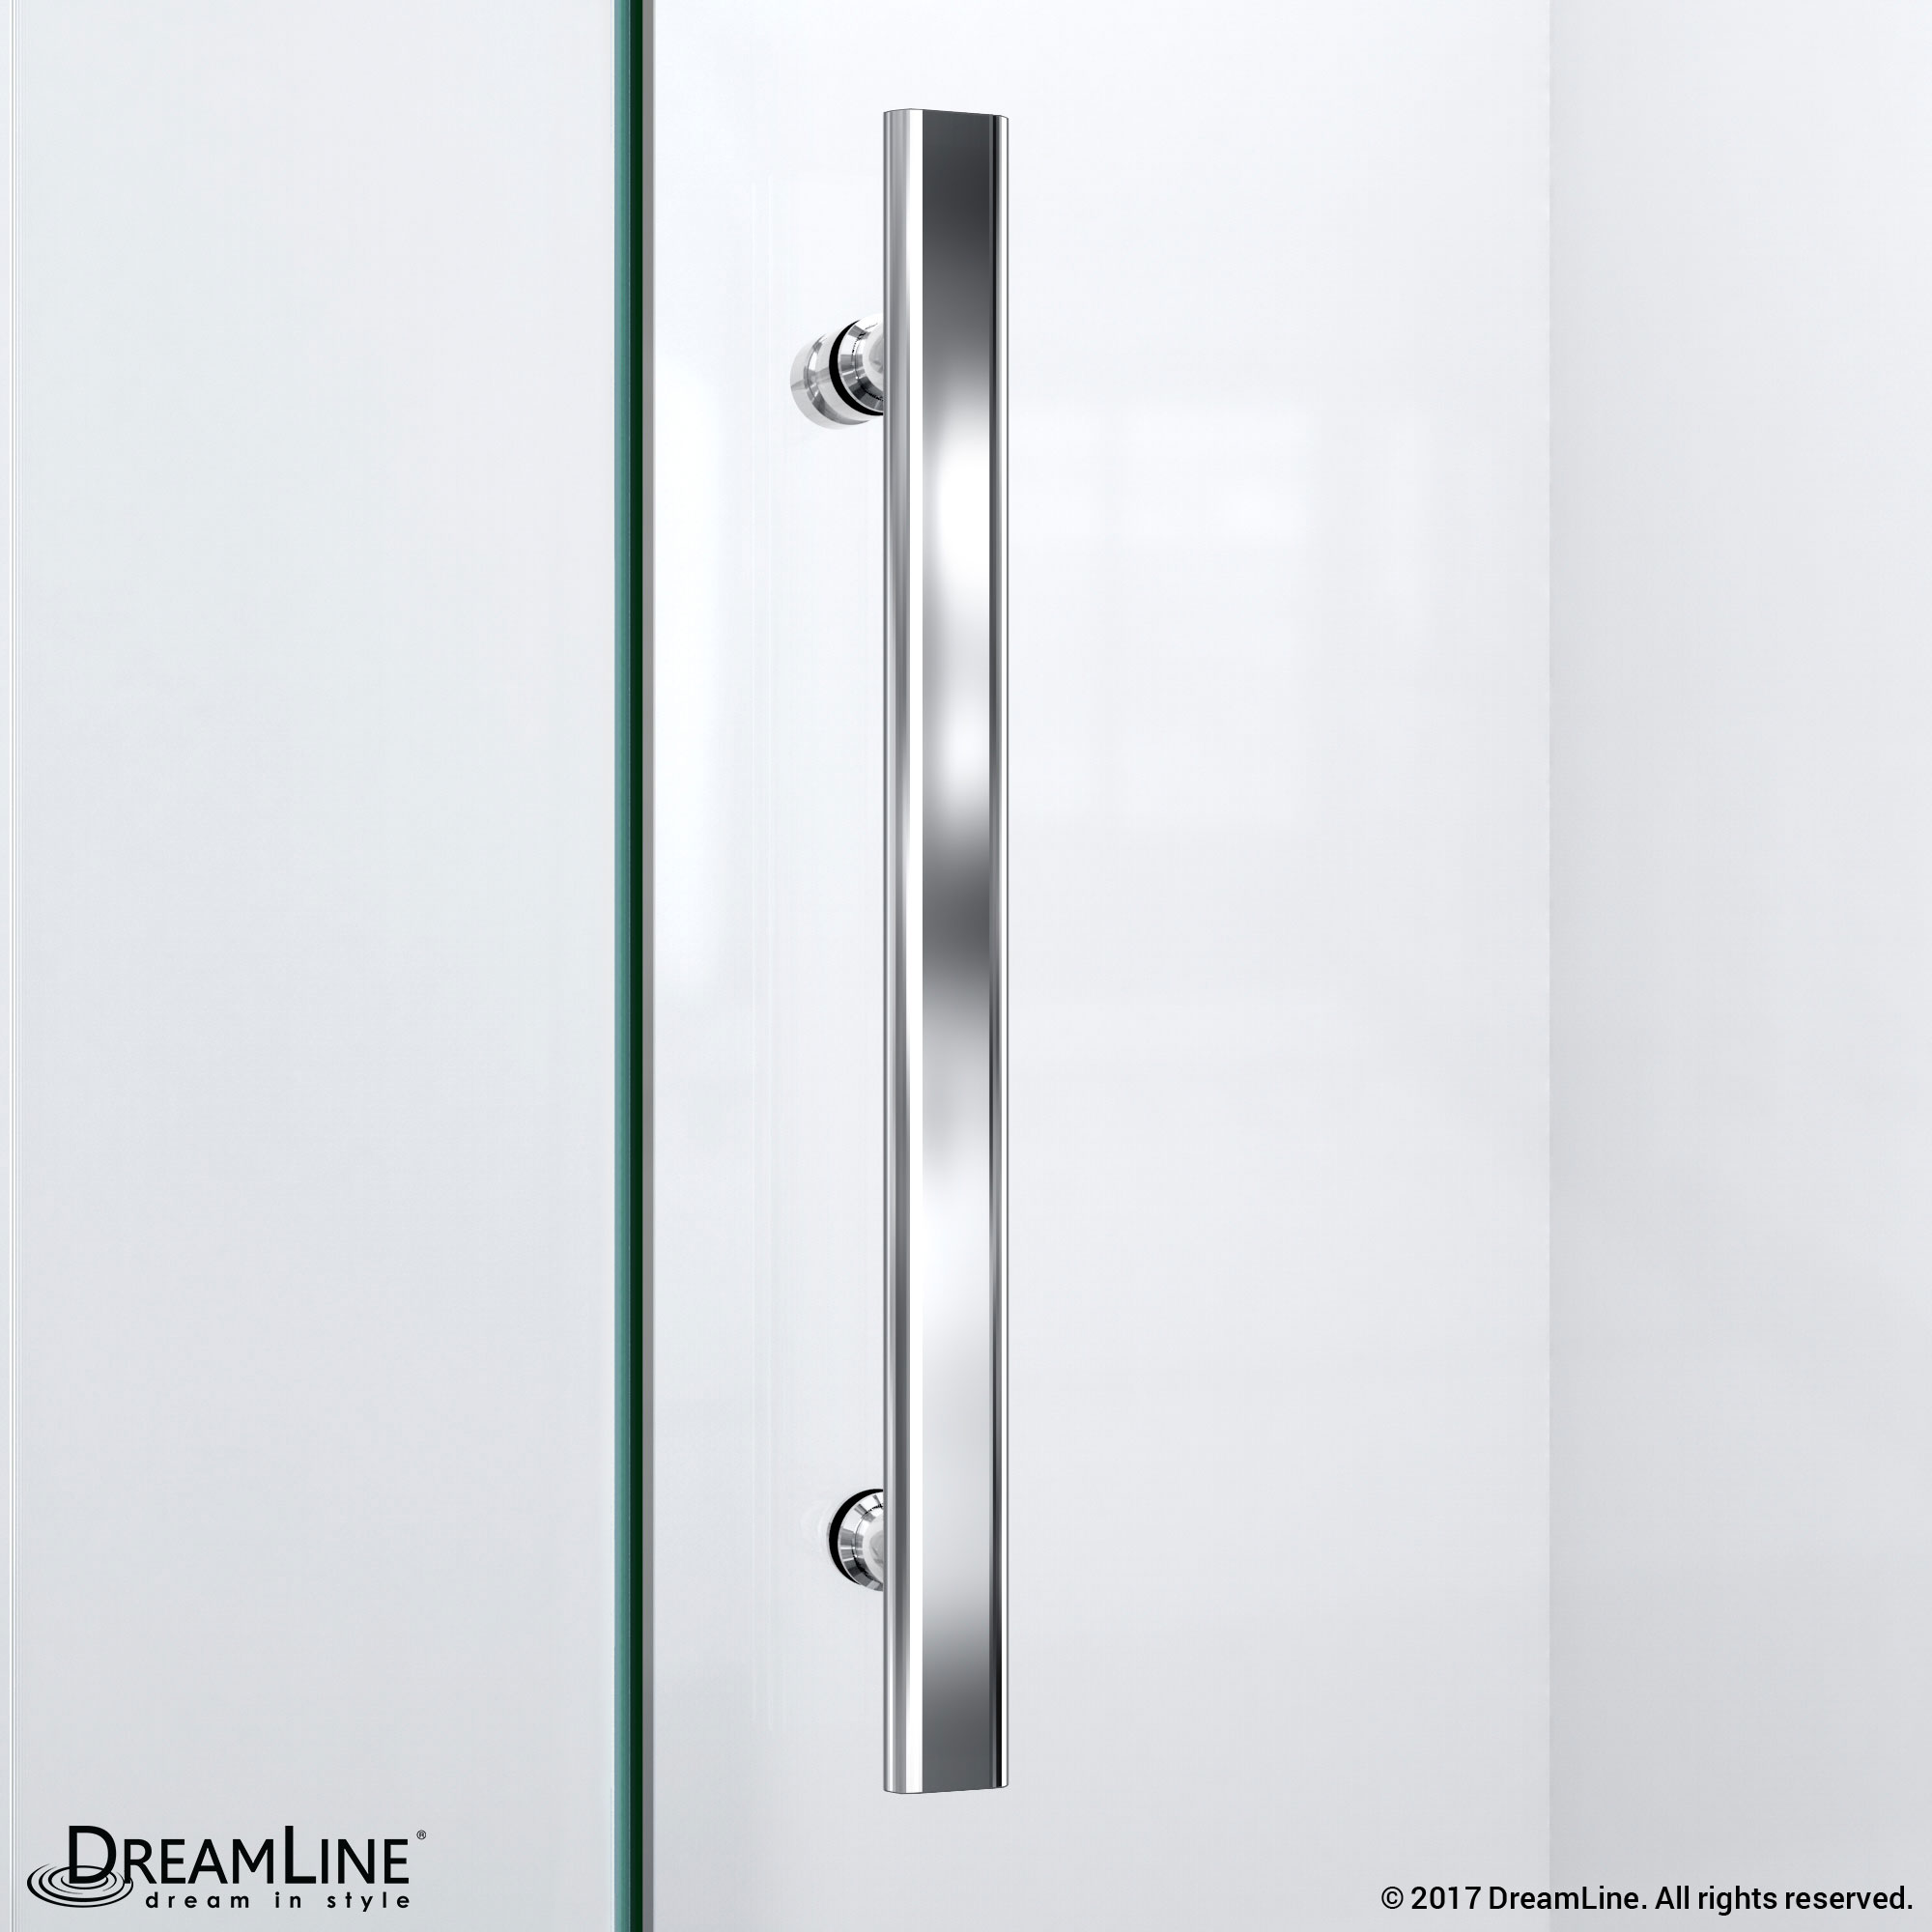 PrismLux 40-3/8" x 40-3/8" Frameless Hinged Shower Enclosure, Clear 3/8" Glass Shower, Chrome